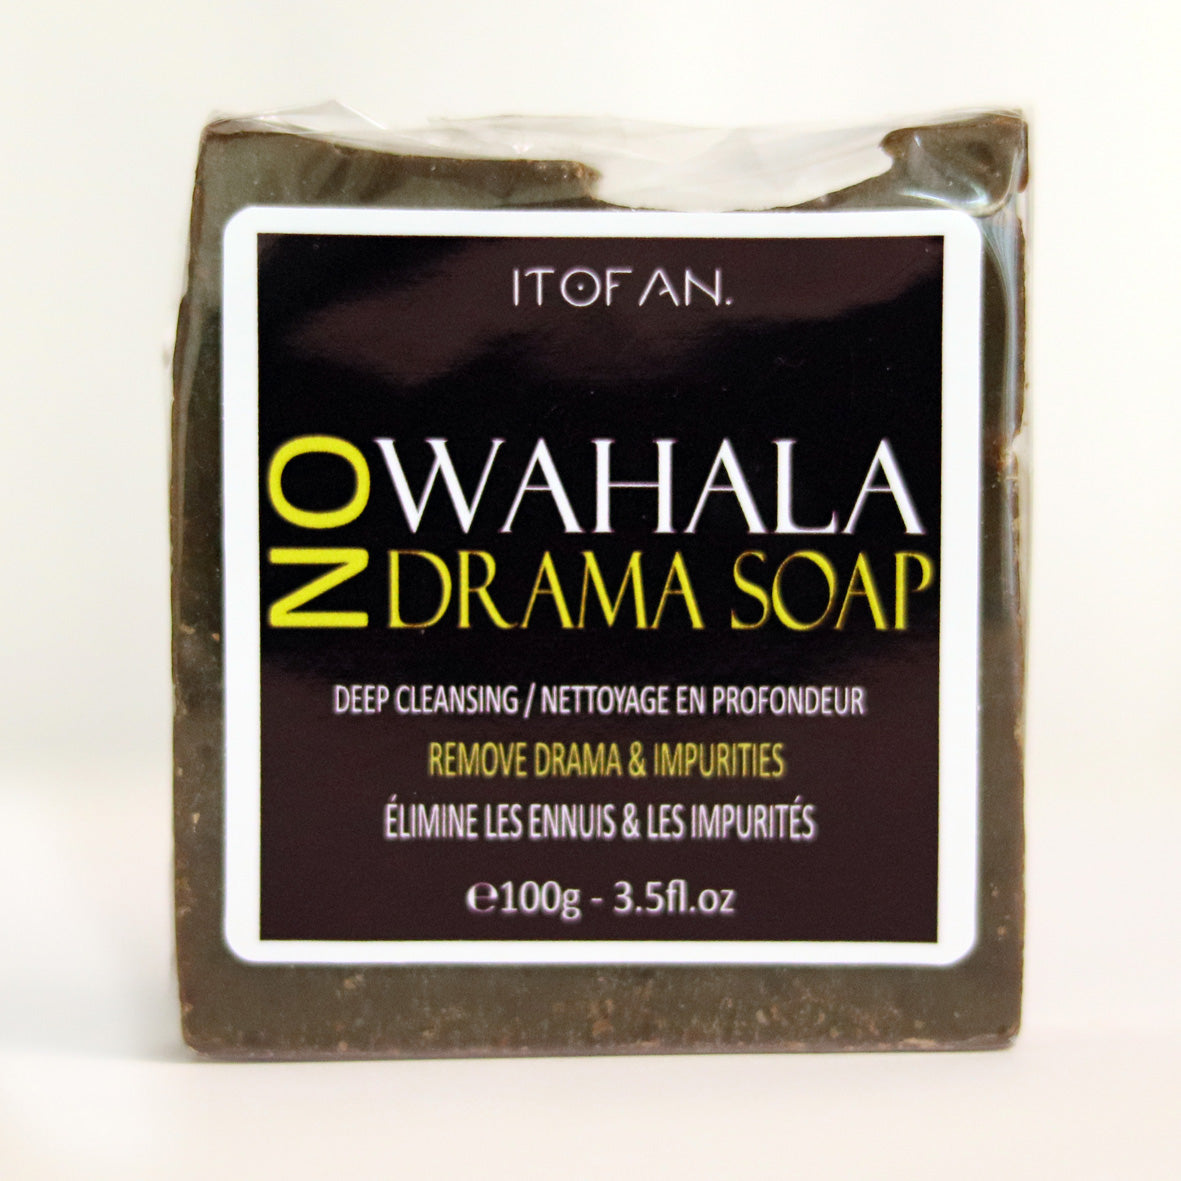 NO WAHALA - NO DRAMA!  Soap